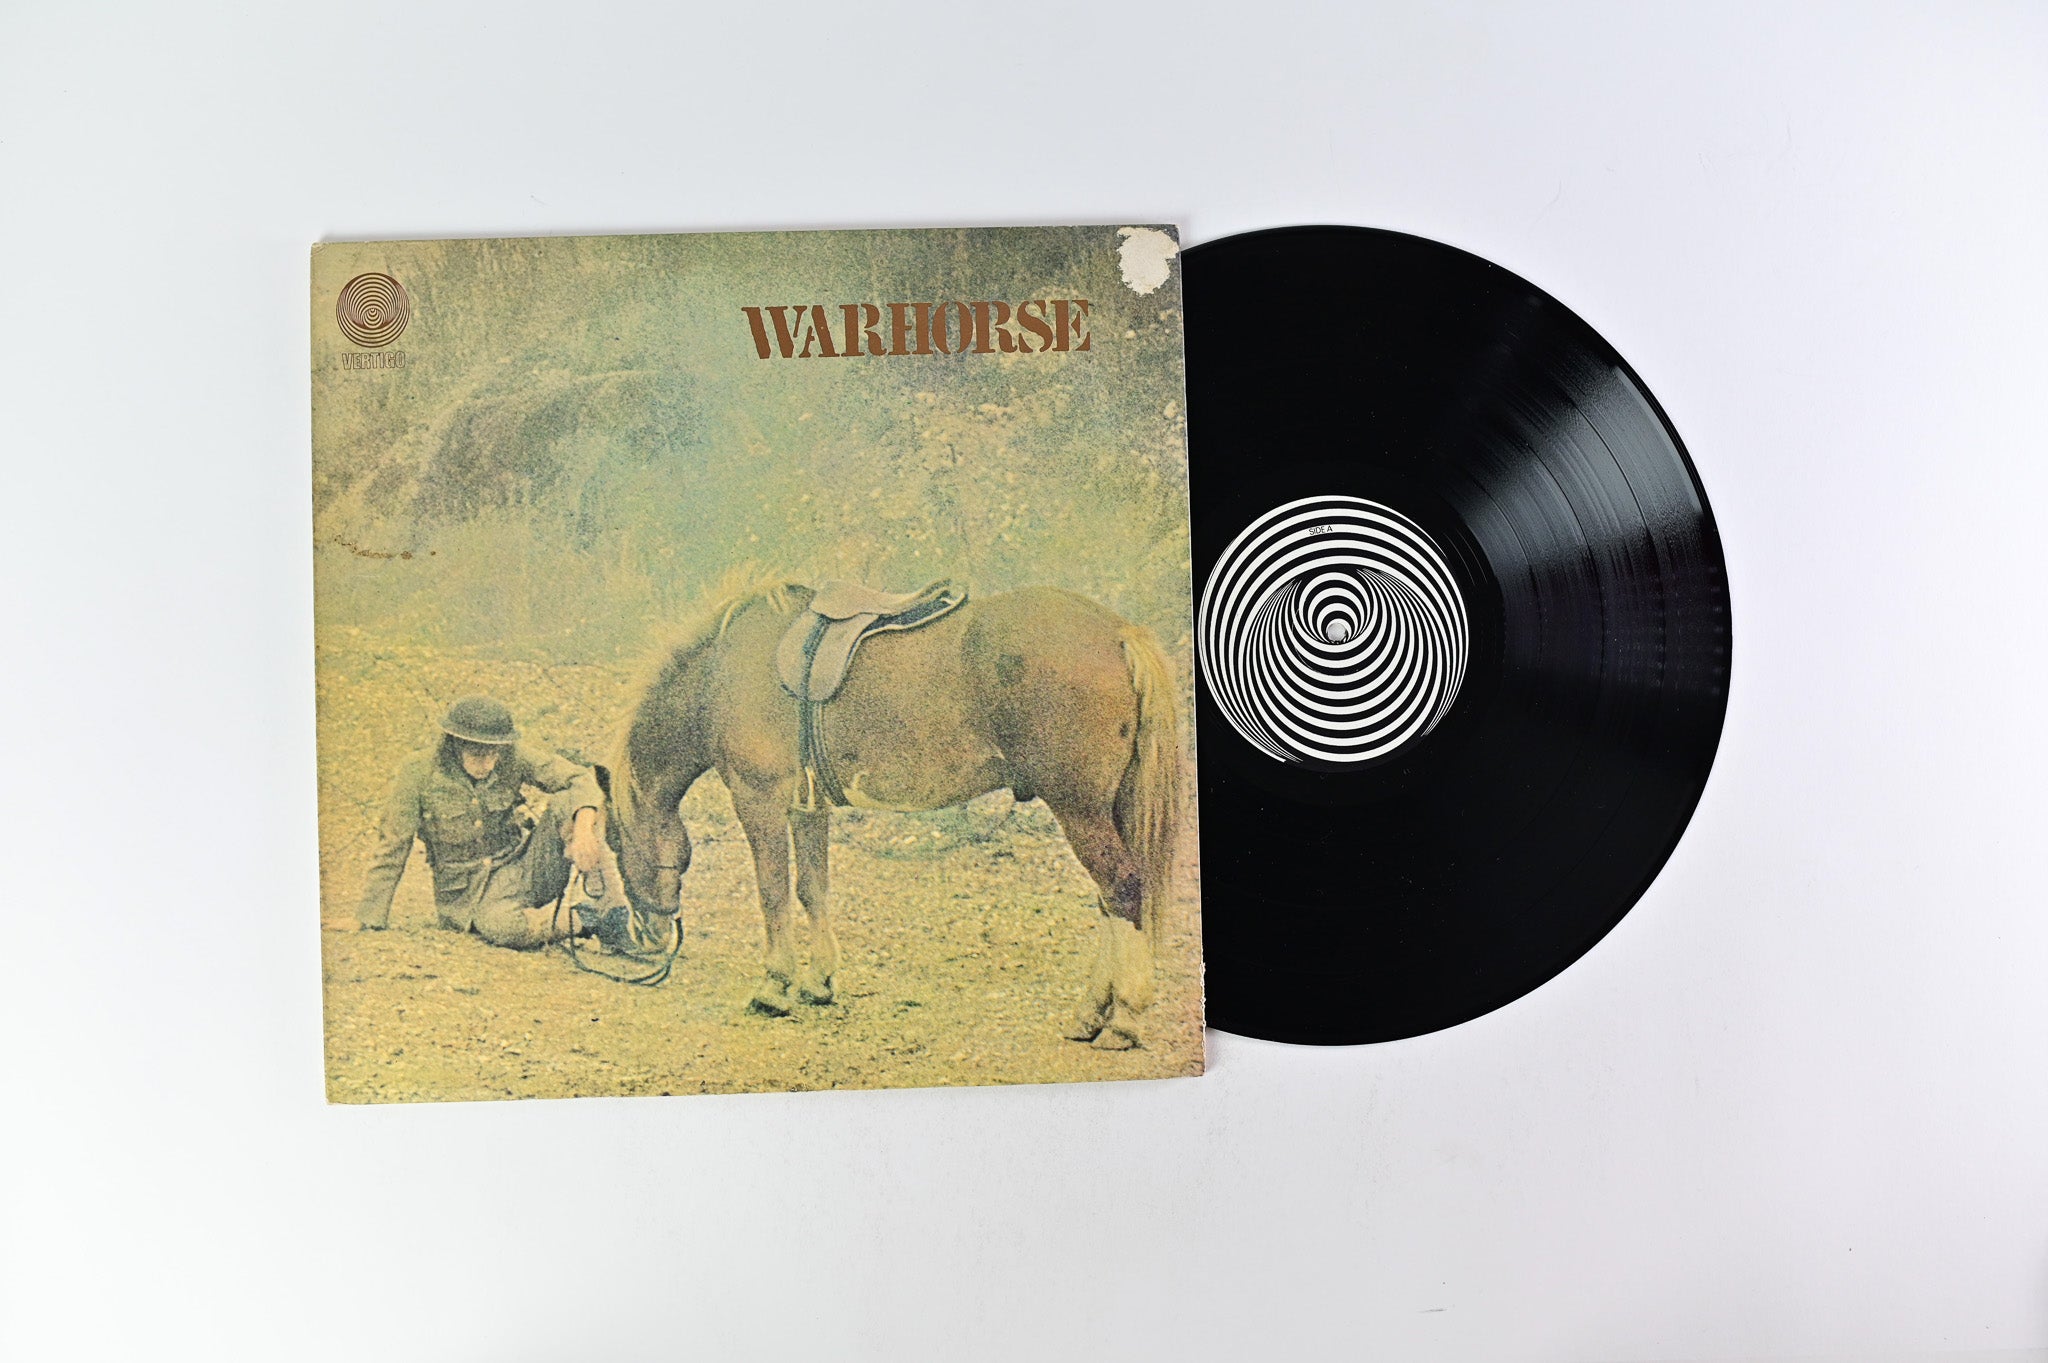 Warhorse - Warhorse on Vertigo UK